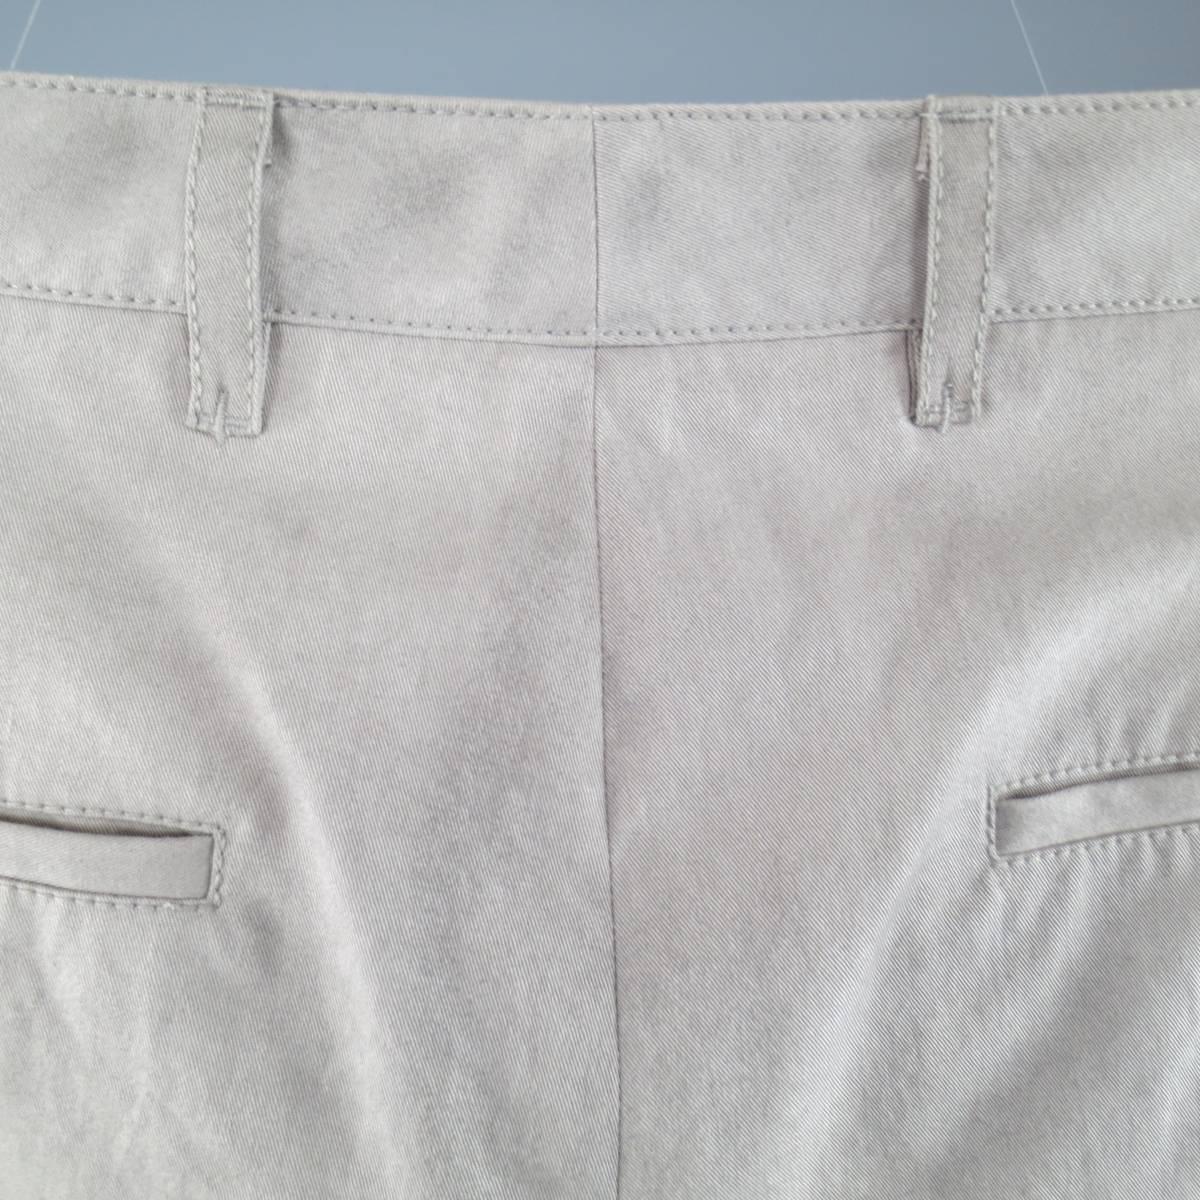 Gray Men's POEME BOHEMIEN Size 34 Light Grey Washed Dyed Cotton Dress Pants